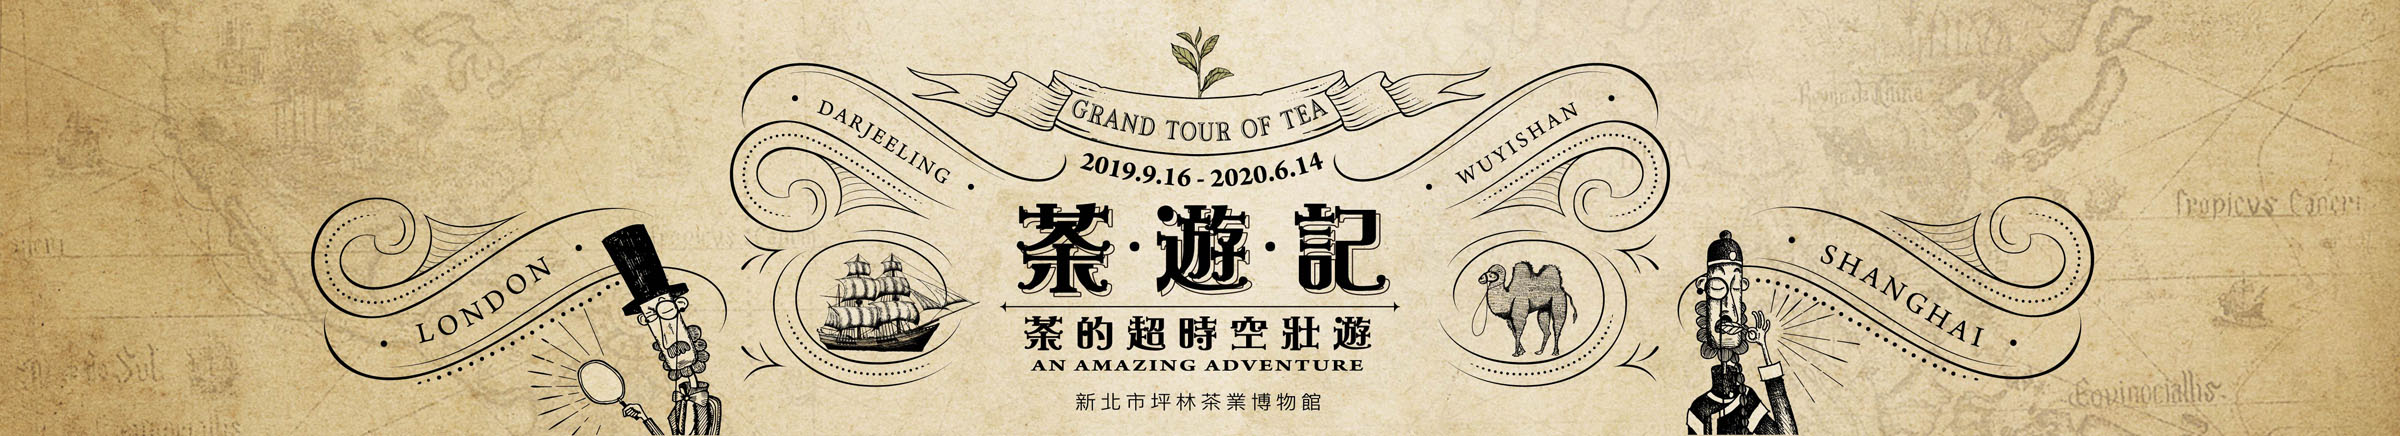 Grand Tour of Tea - An Amazing Journey